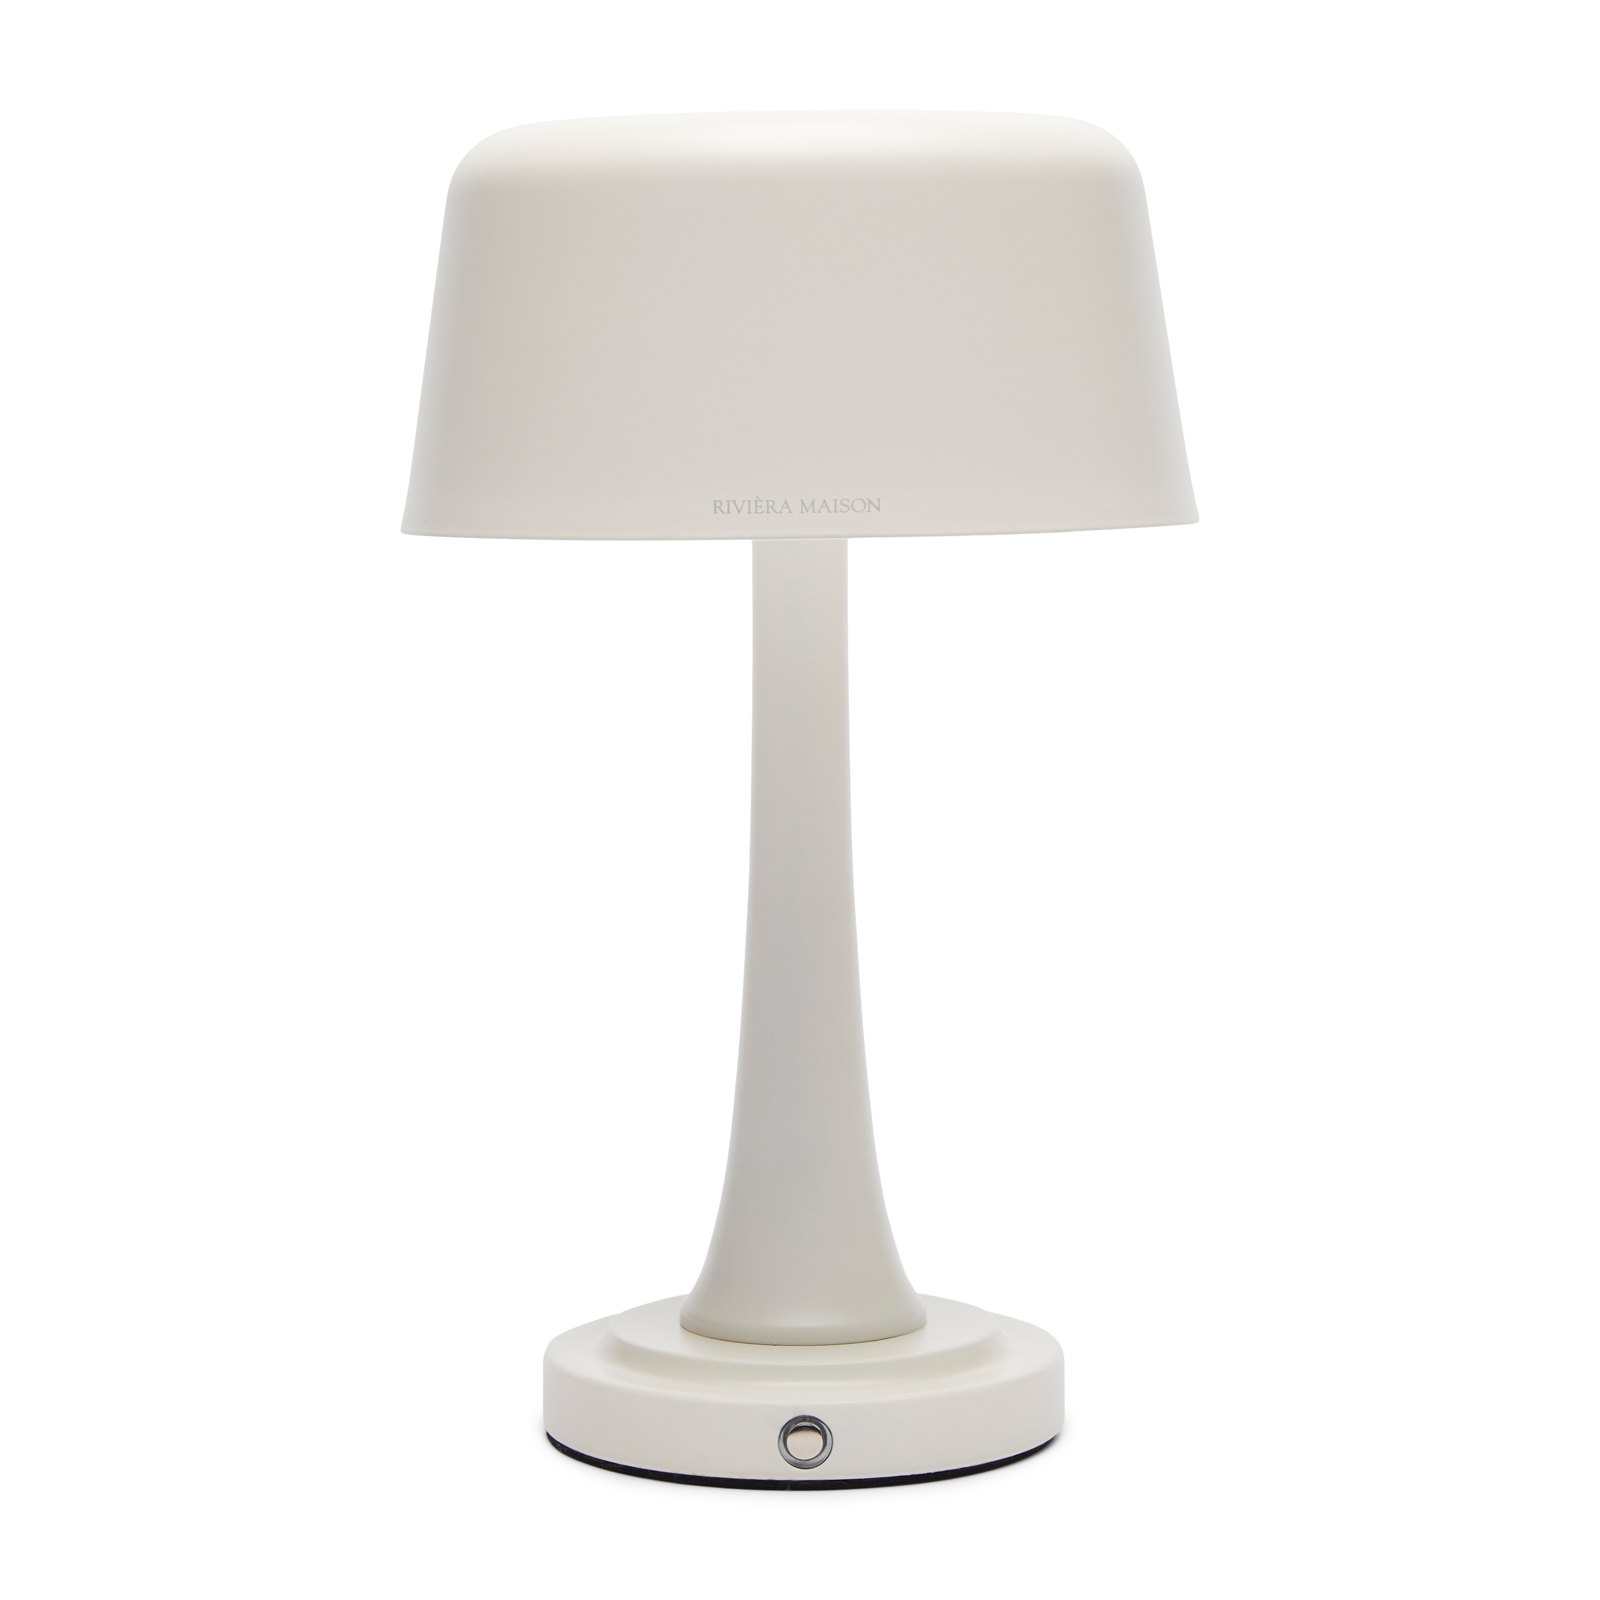 RM Bellagio LED Table Lamp whisper white